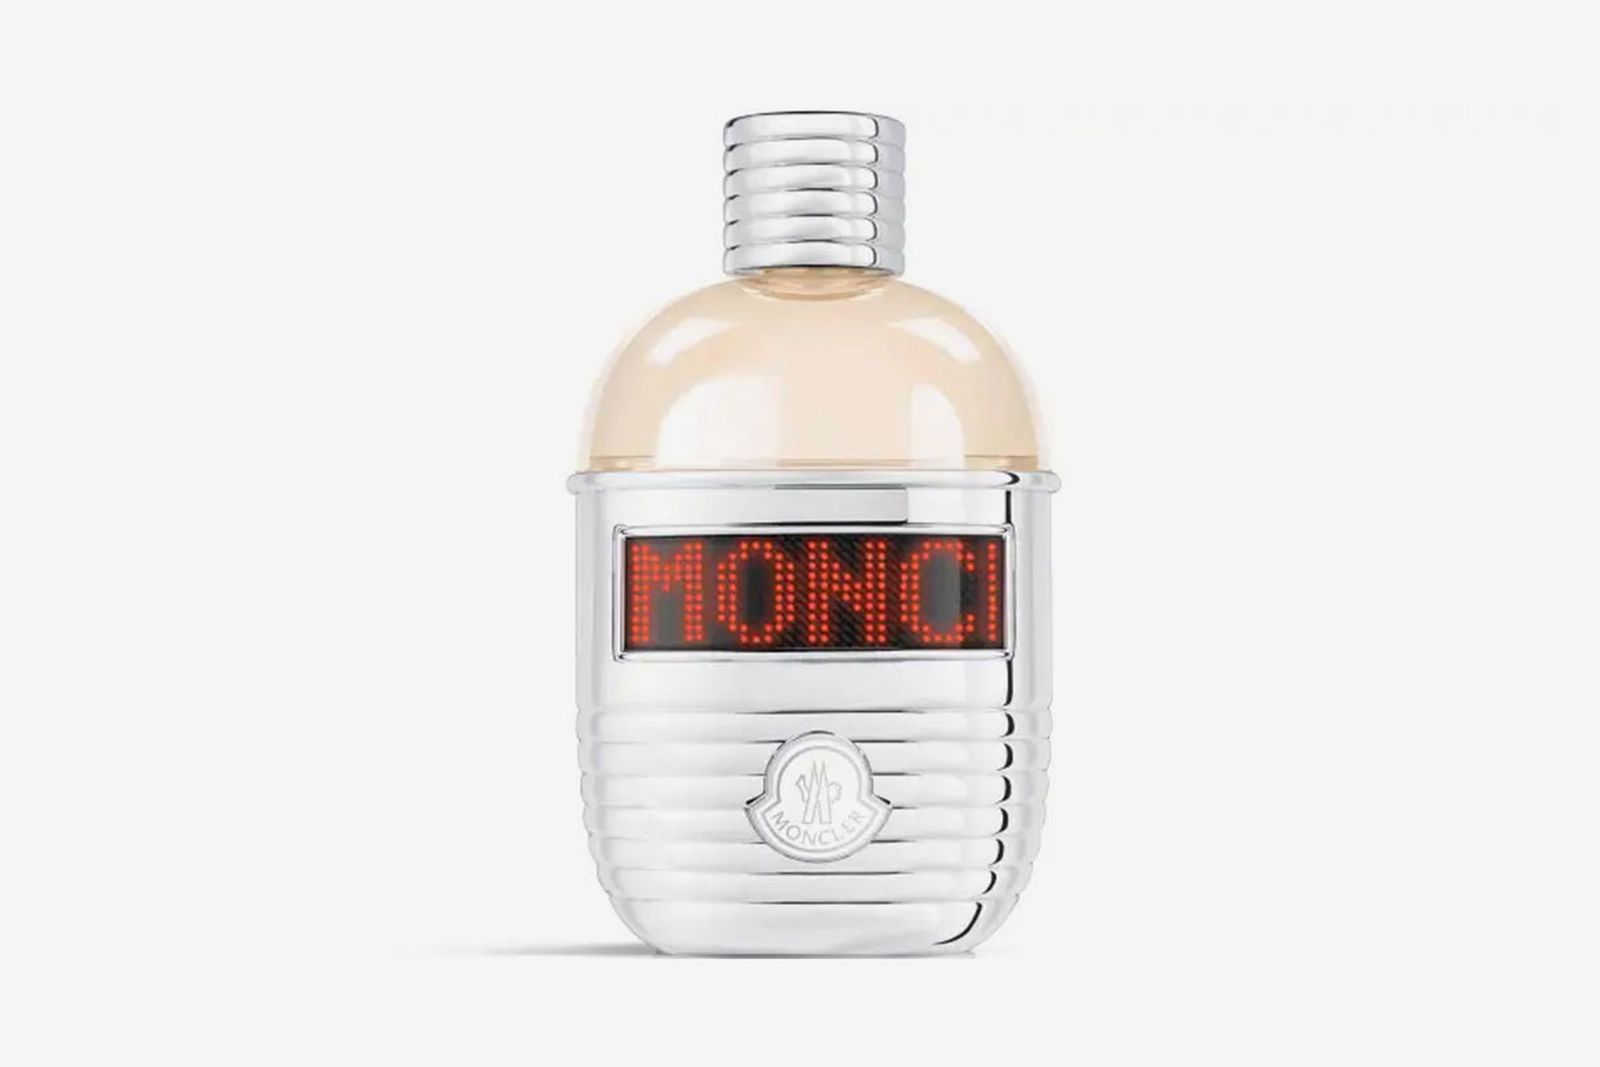 moncler-fragrance-perfume-01